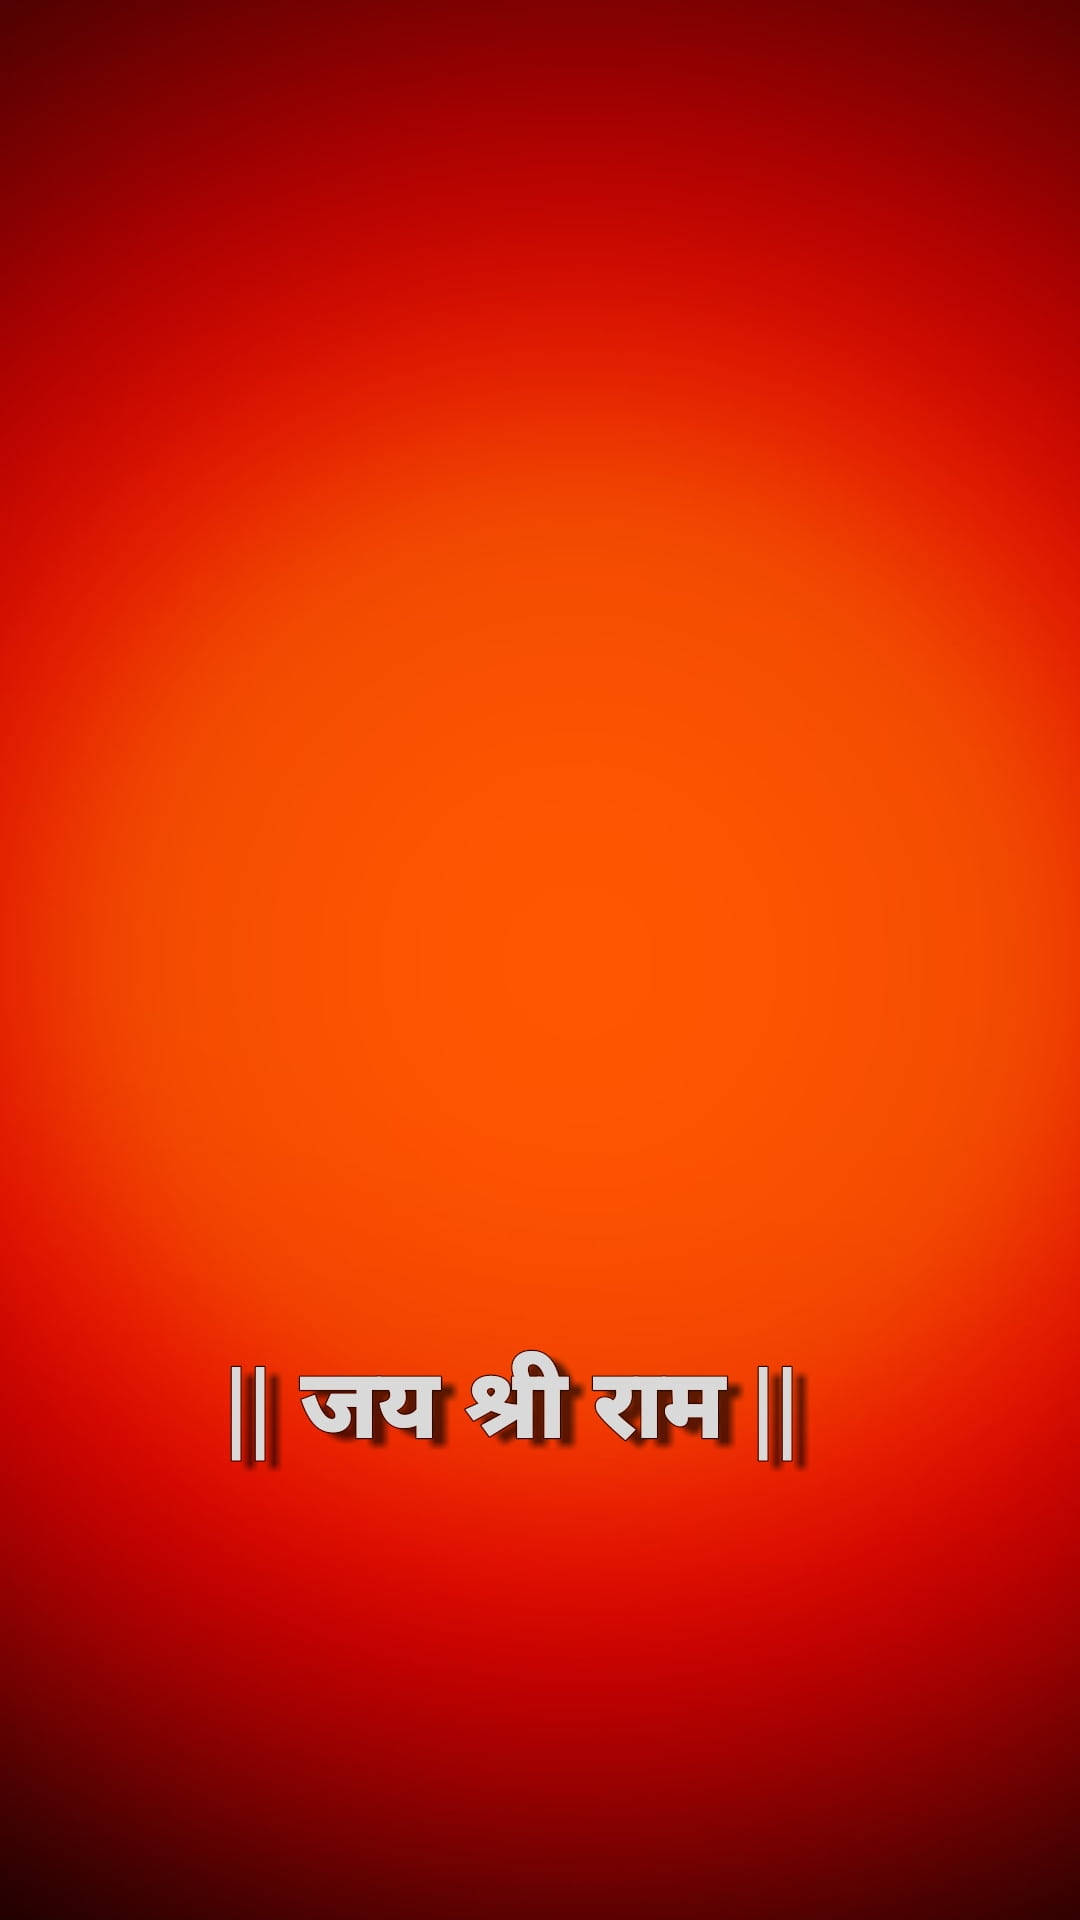 Shree Ram Orange Citat Wallpaper